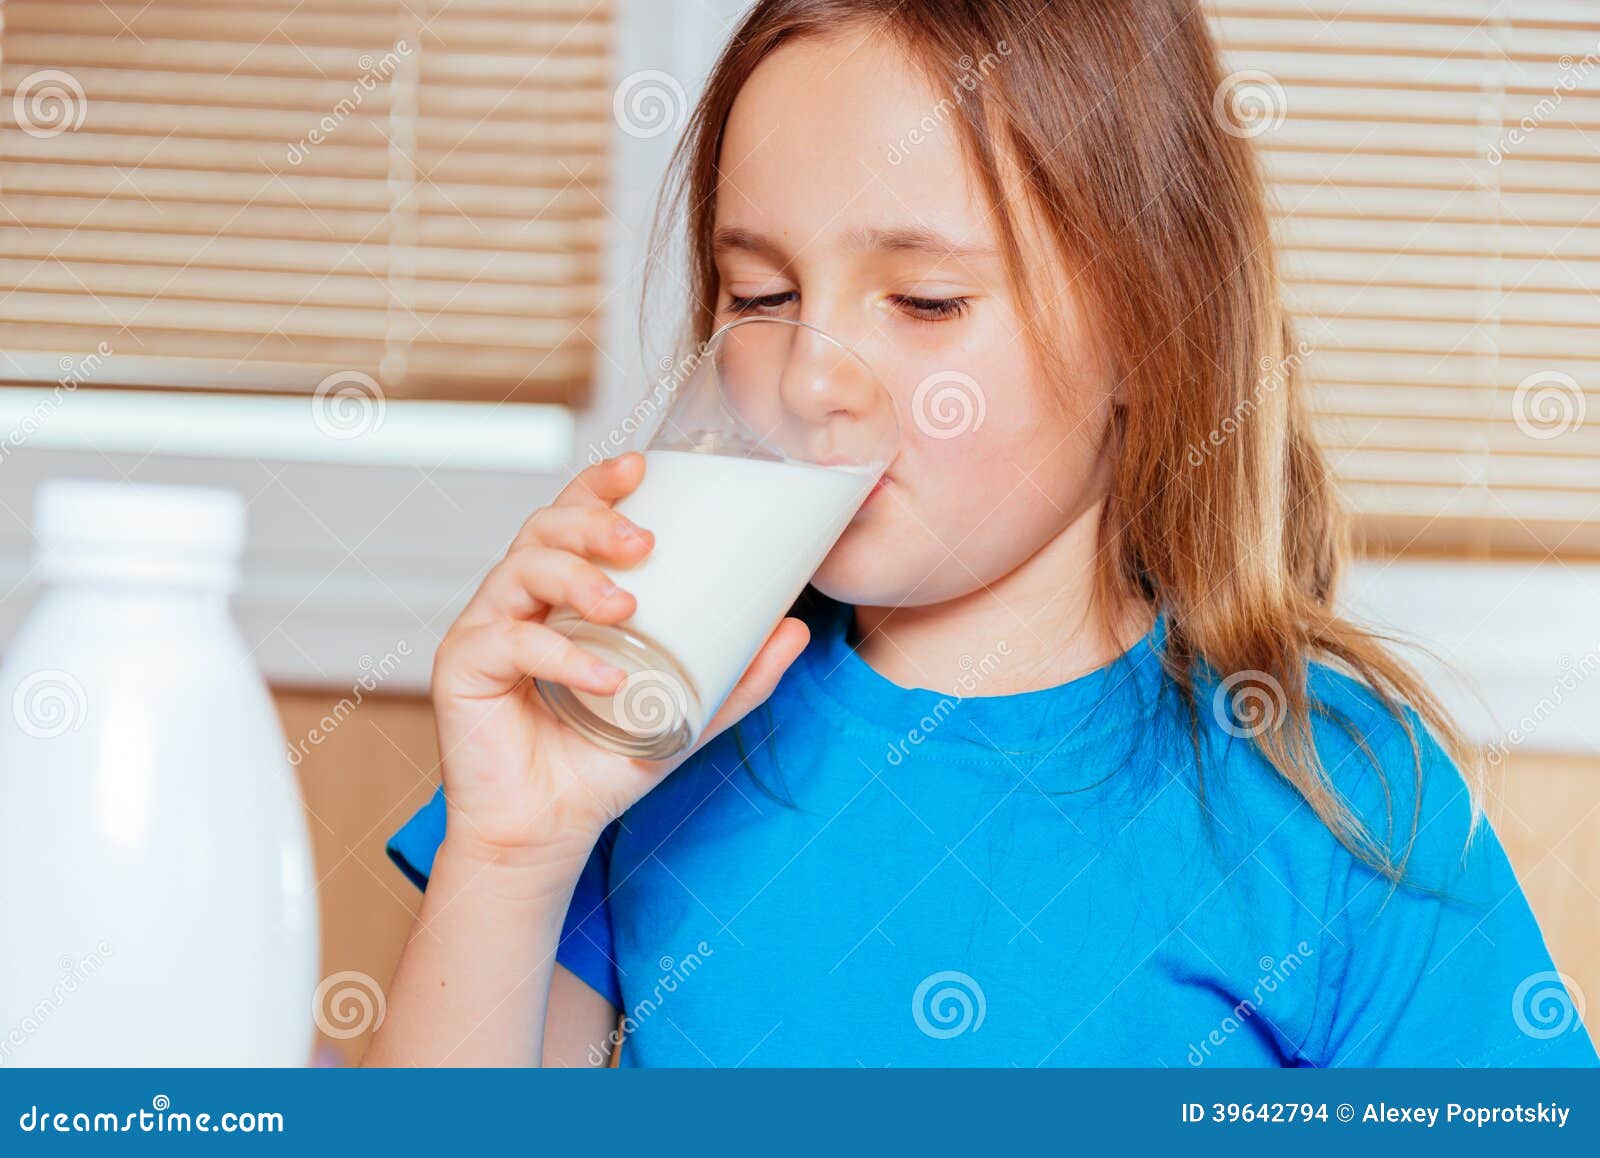 Пьет молоко на английском. Девочка пьет молоко. Ребенок пьет молоко. Девочка пьющая молоко. Человек пьет молоко.